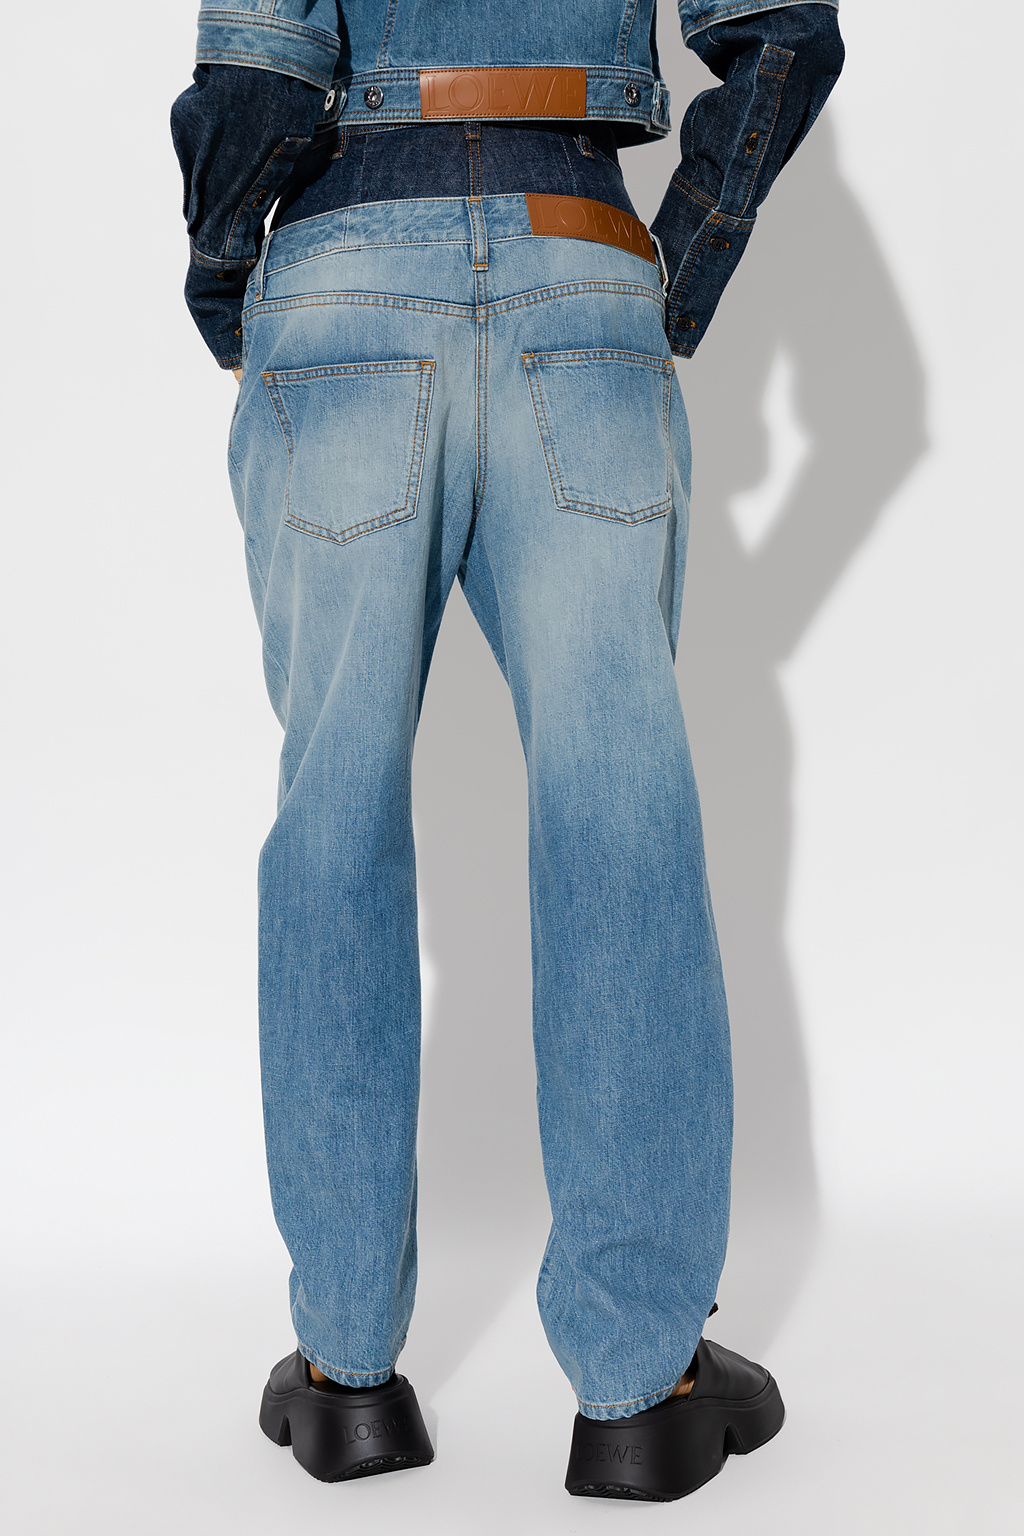 Loewe High-waisted jeans